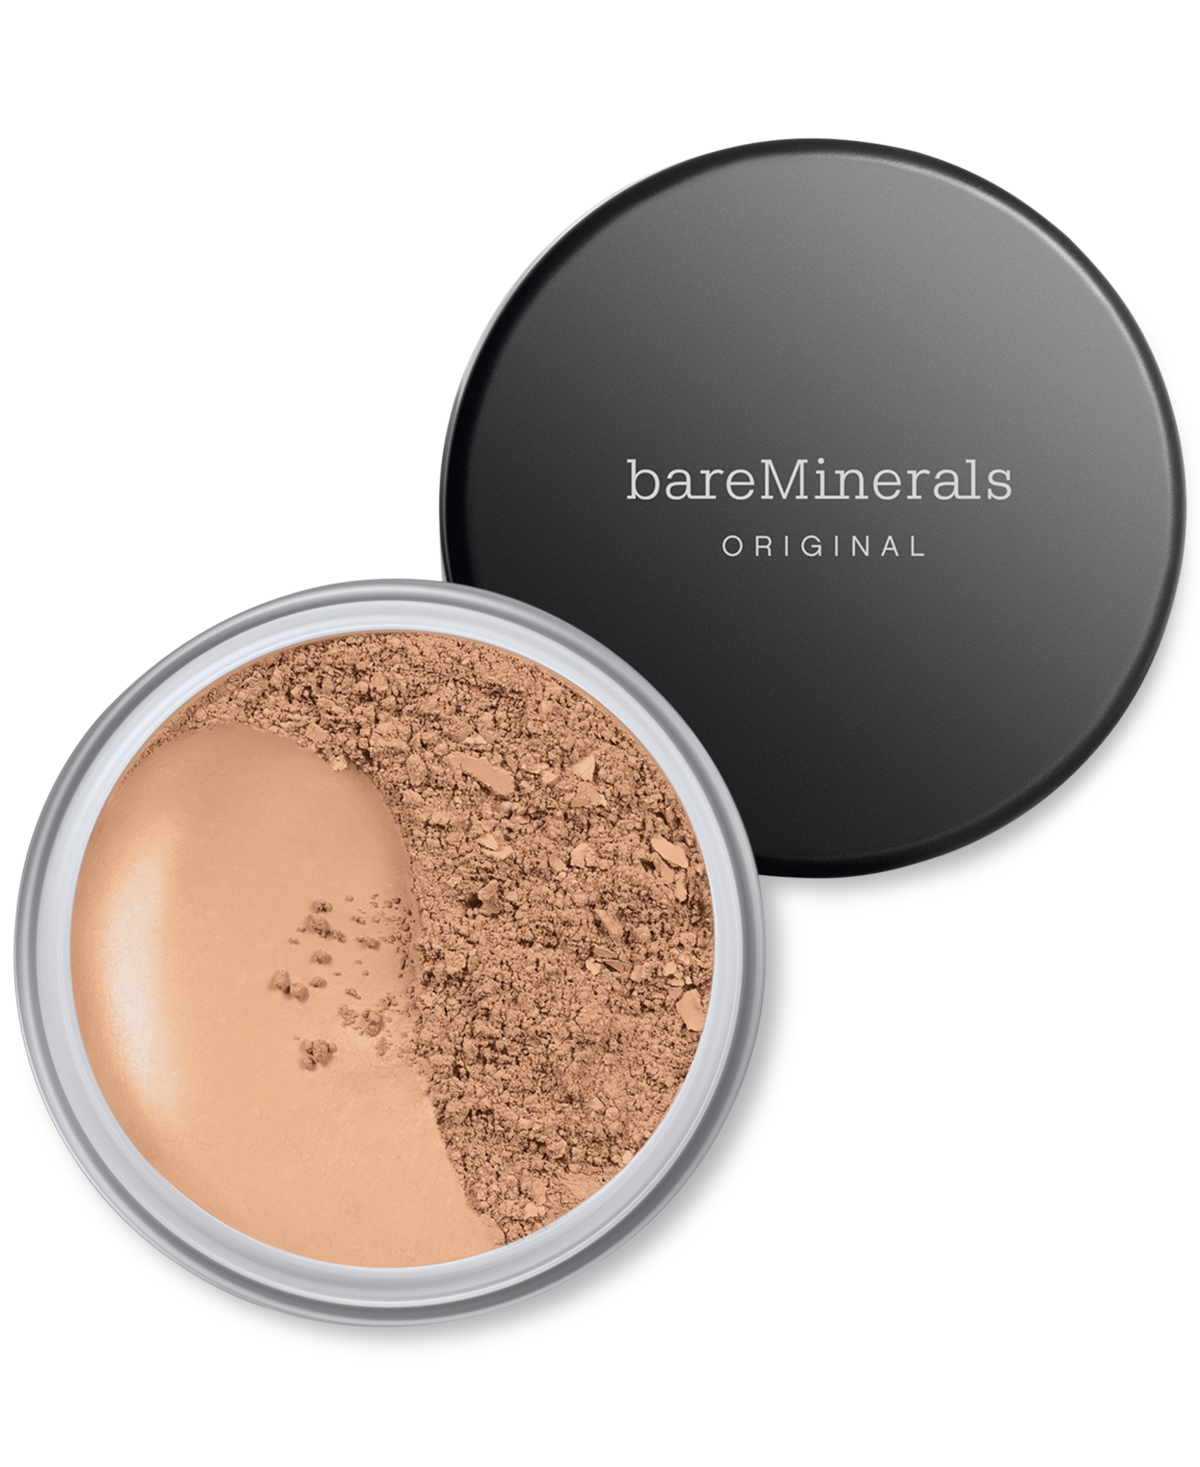 Bareminerals Original Loose Powder Foundation Spf 15 In Medium Tan  - For Medium To Tan Skin Wit